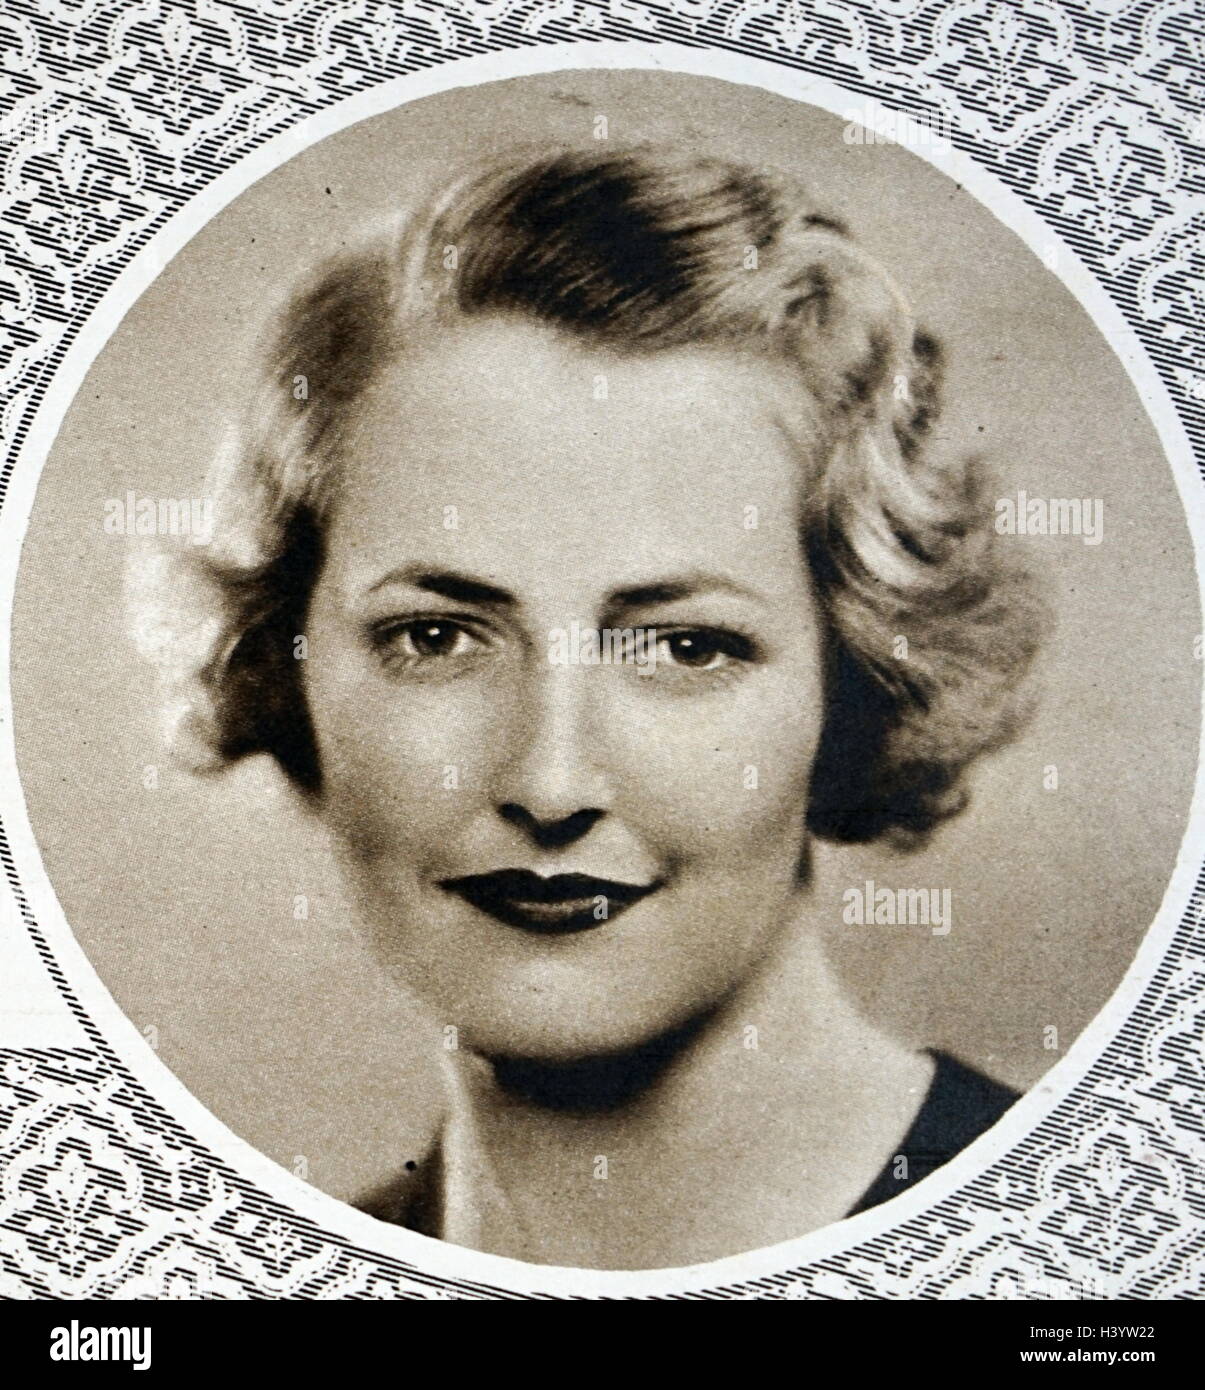 Photograph of Lavinia Fitzalan-Howard, Duchess of Norfolk (1916-1995) a British noblewoman. Dated 20th Century Stock Photo